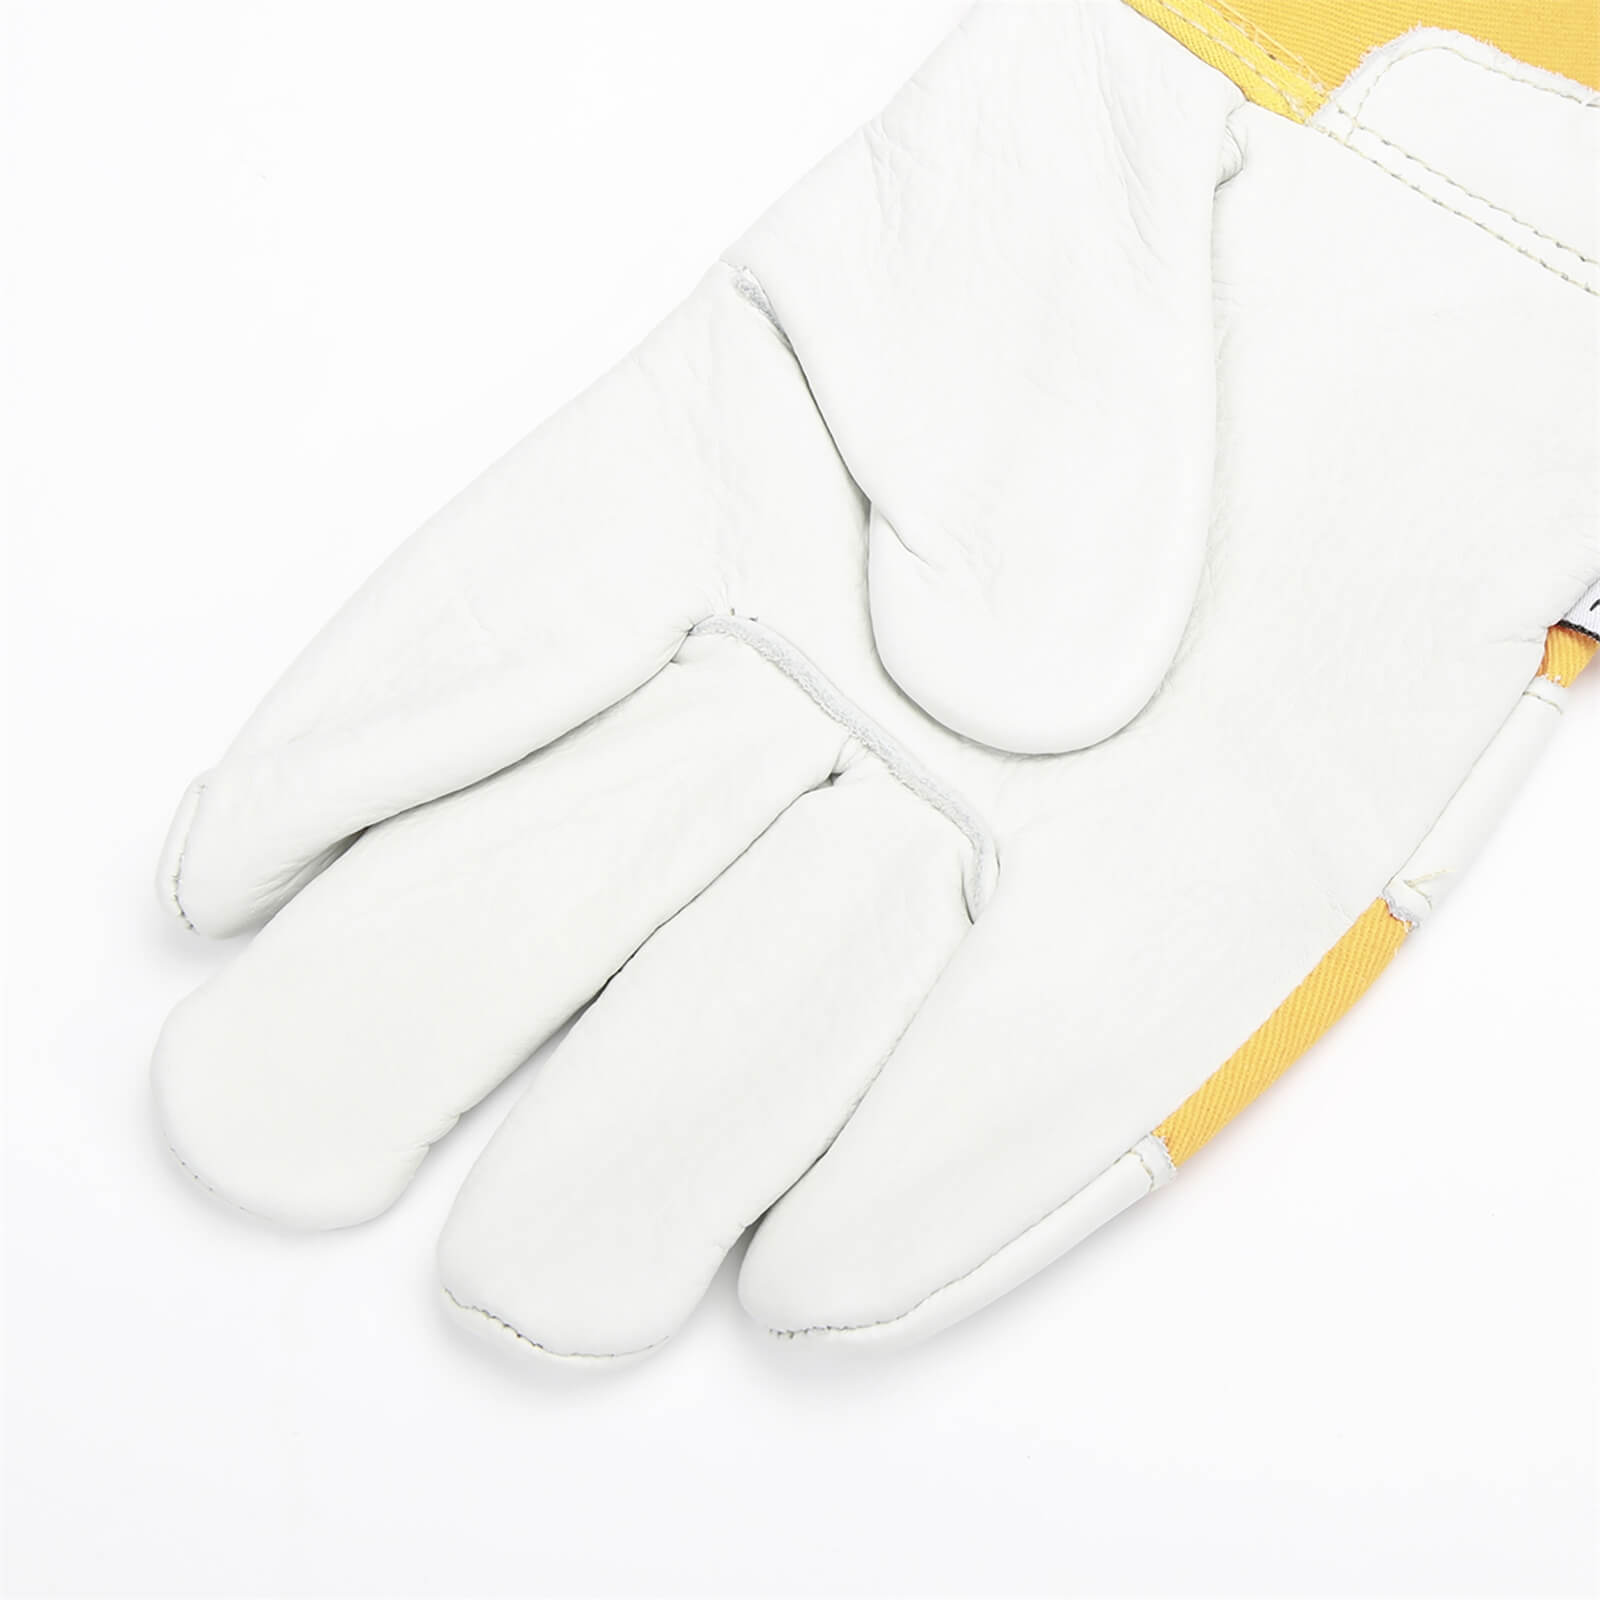 Homebase Premium Rigger Glove - Small